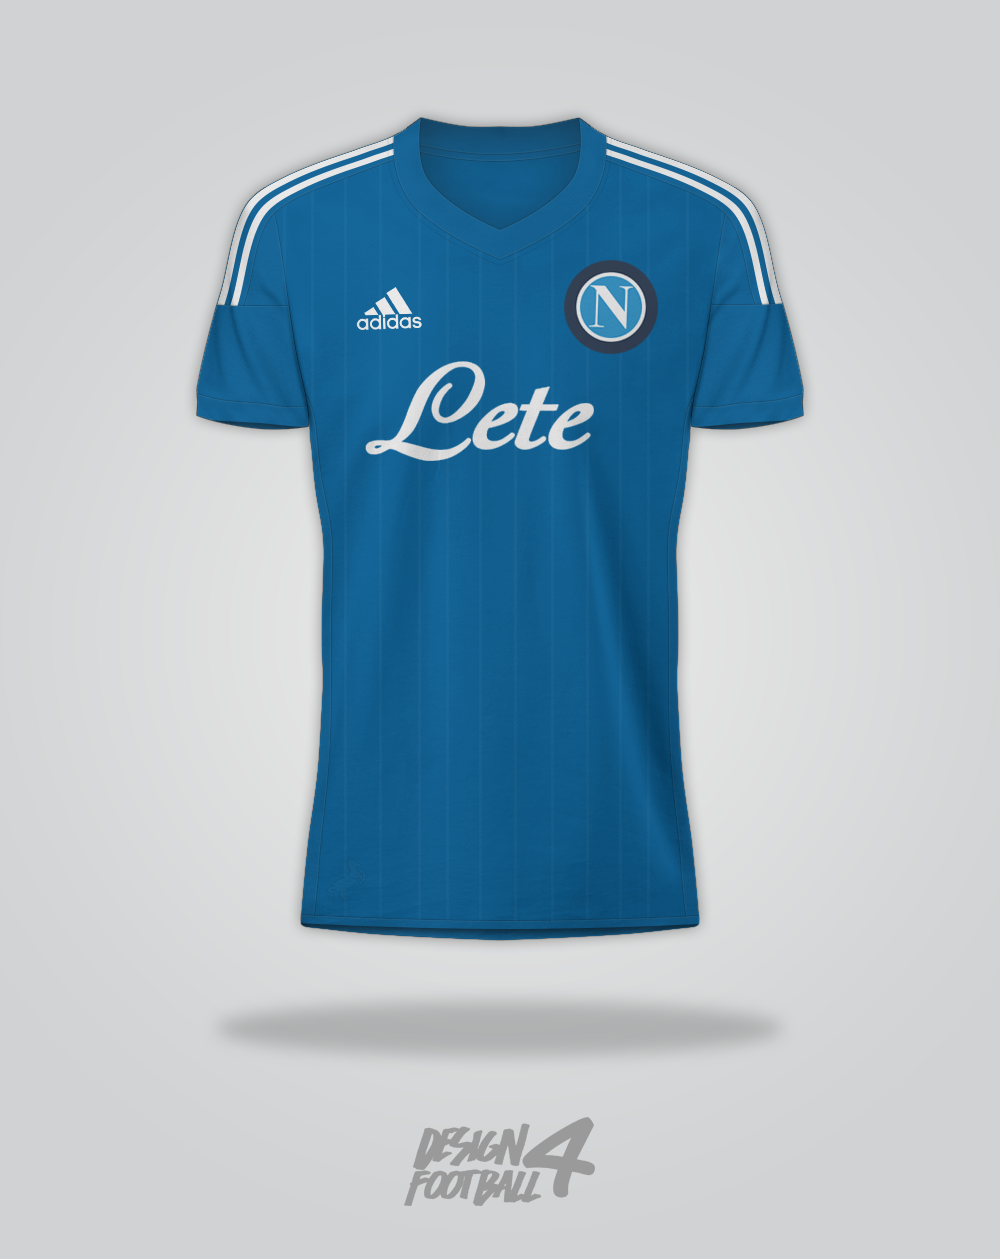 Design4Football Twitter: "S.S.C Napoli - Adidas http://t.co/PbxK5W8tUS" / Twitter